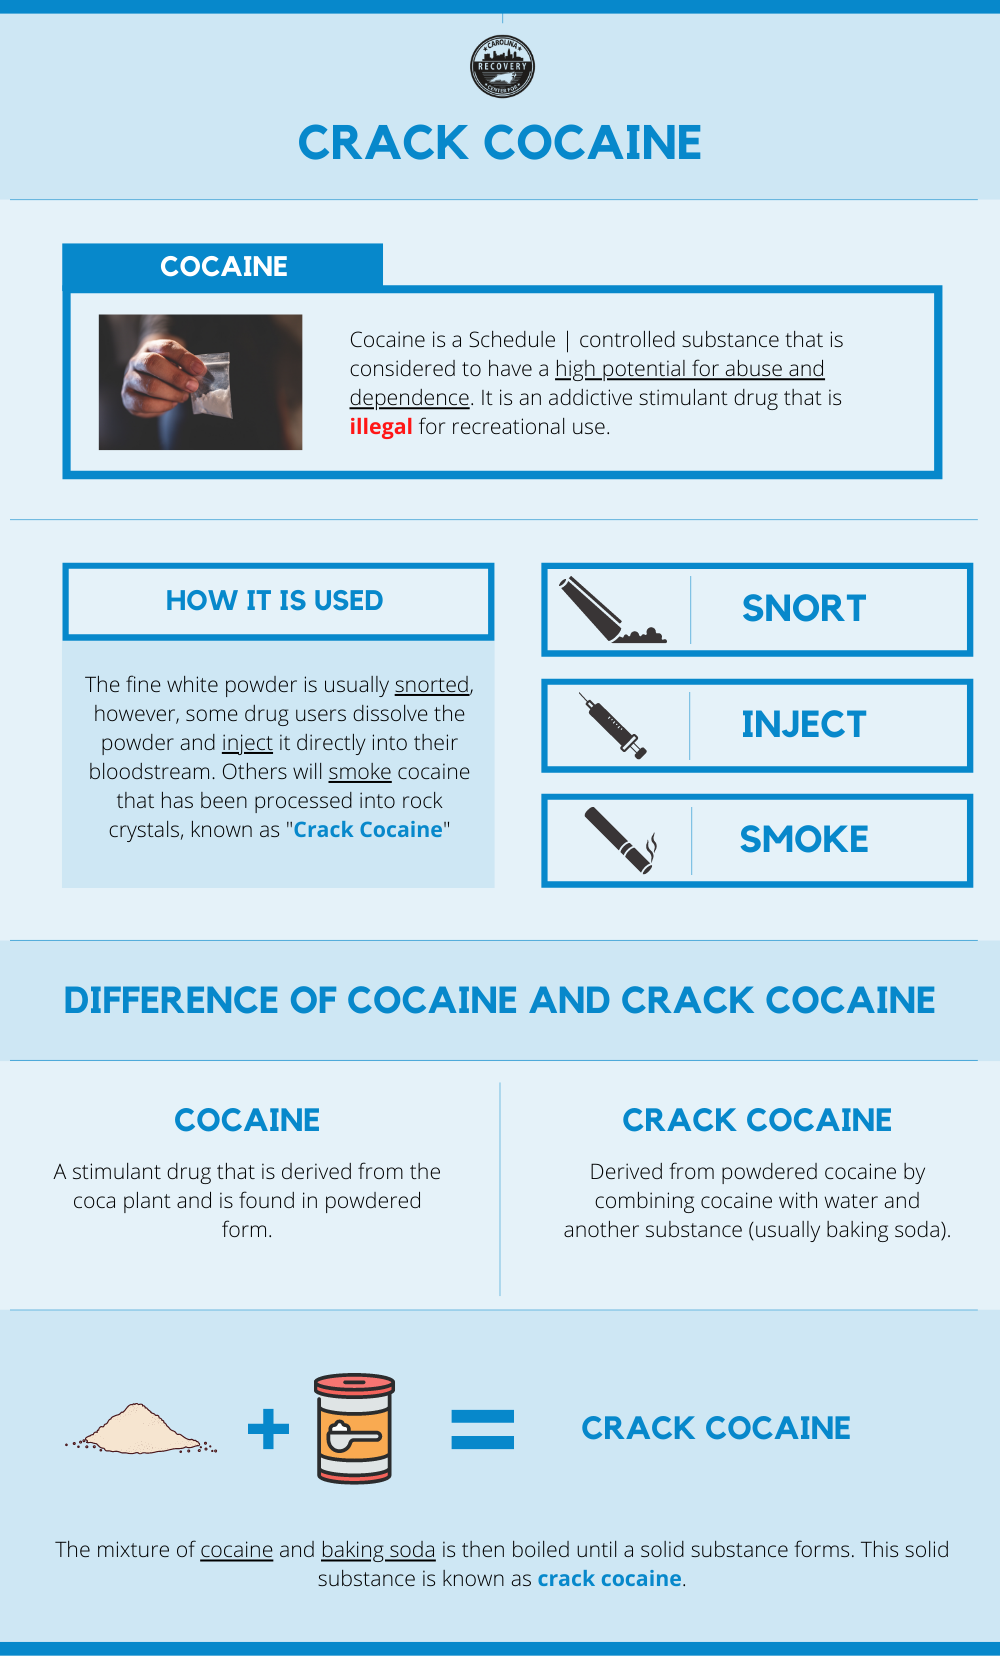 Is Crack Cocaine a Stimulant?